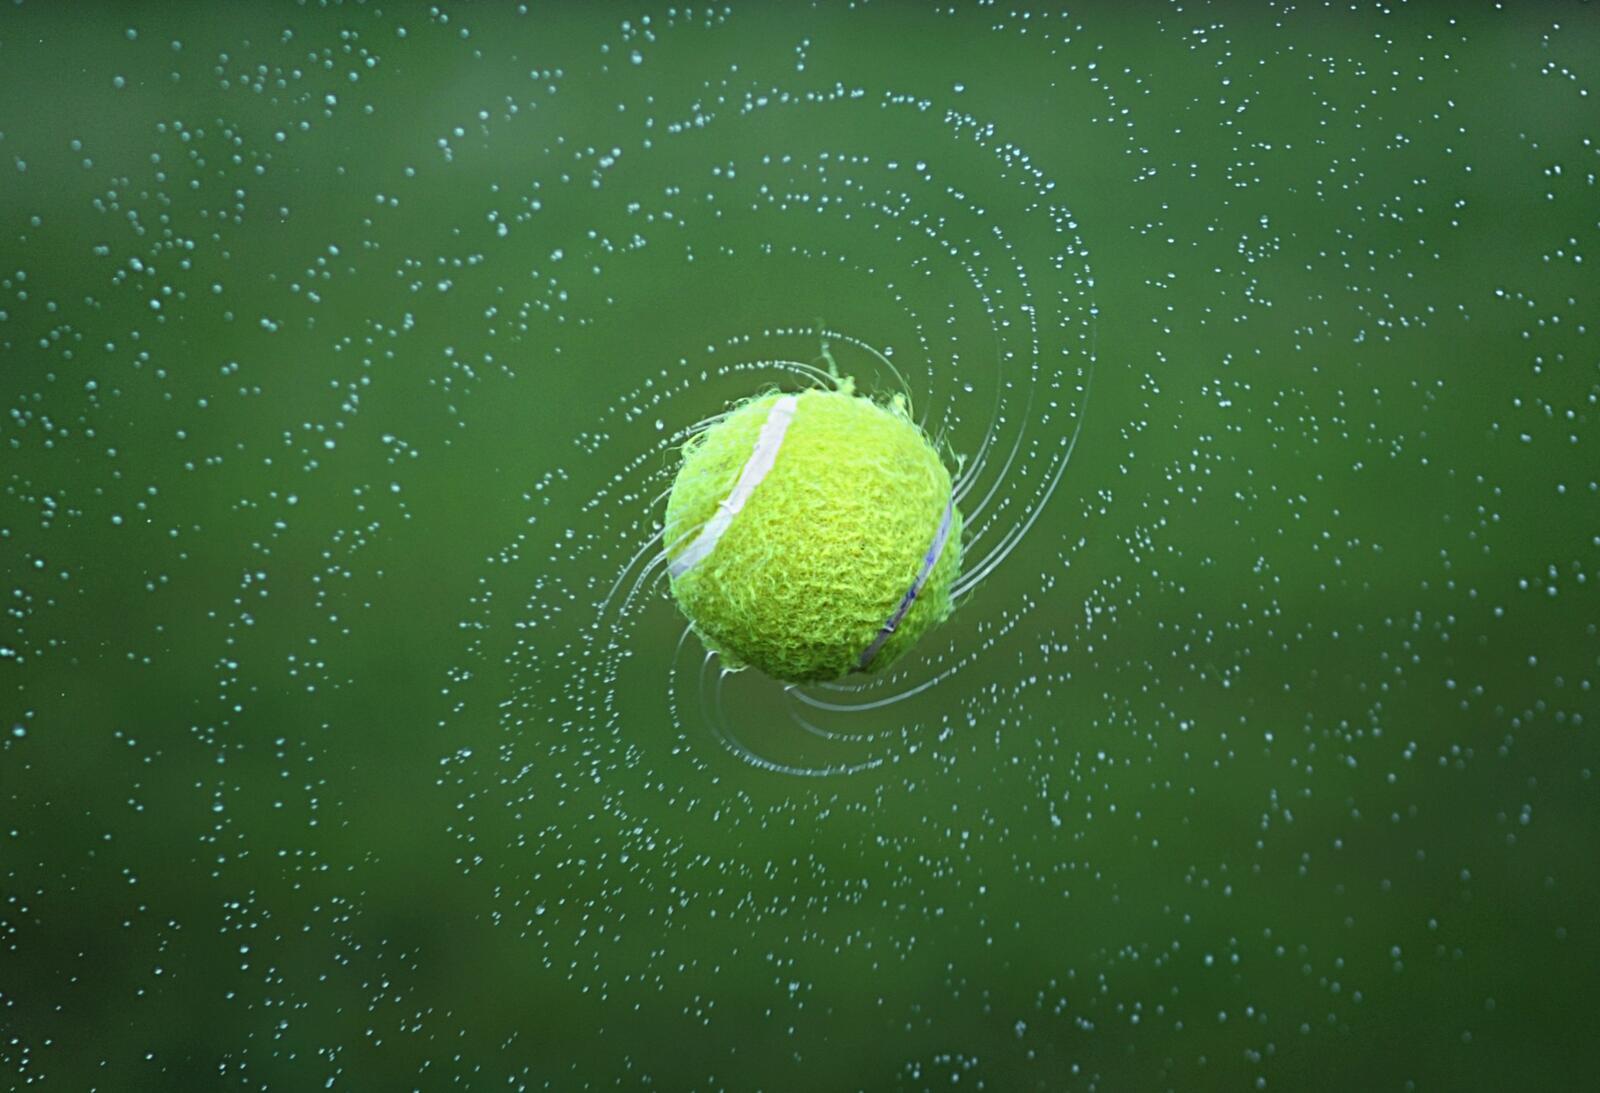 Free photo A wet tennis ball swirls in the air